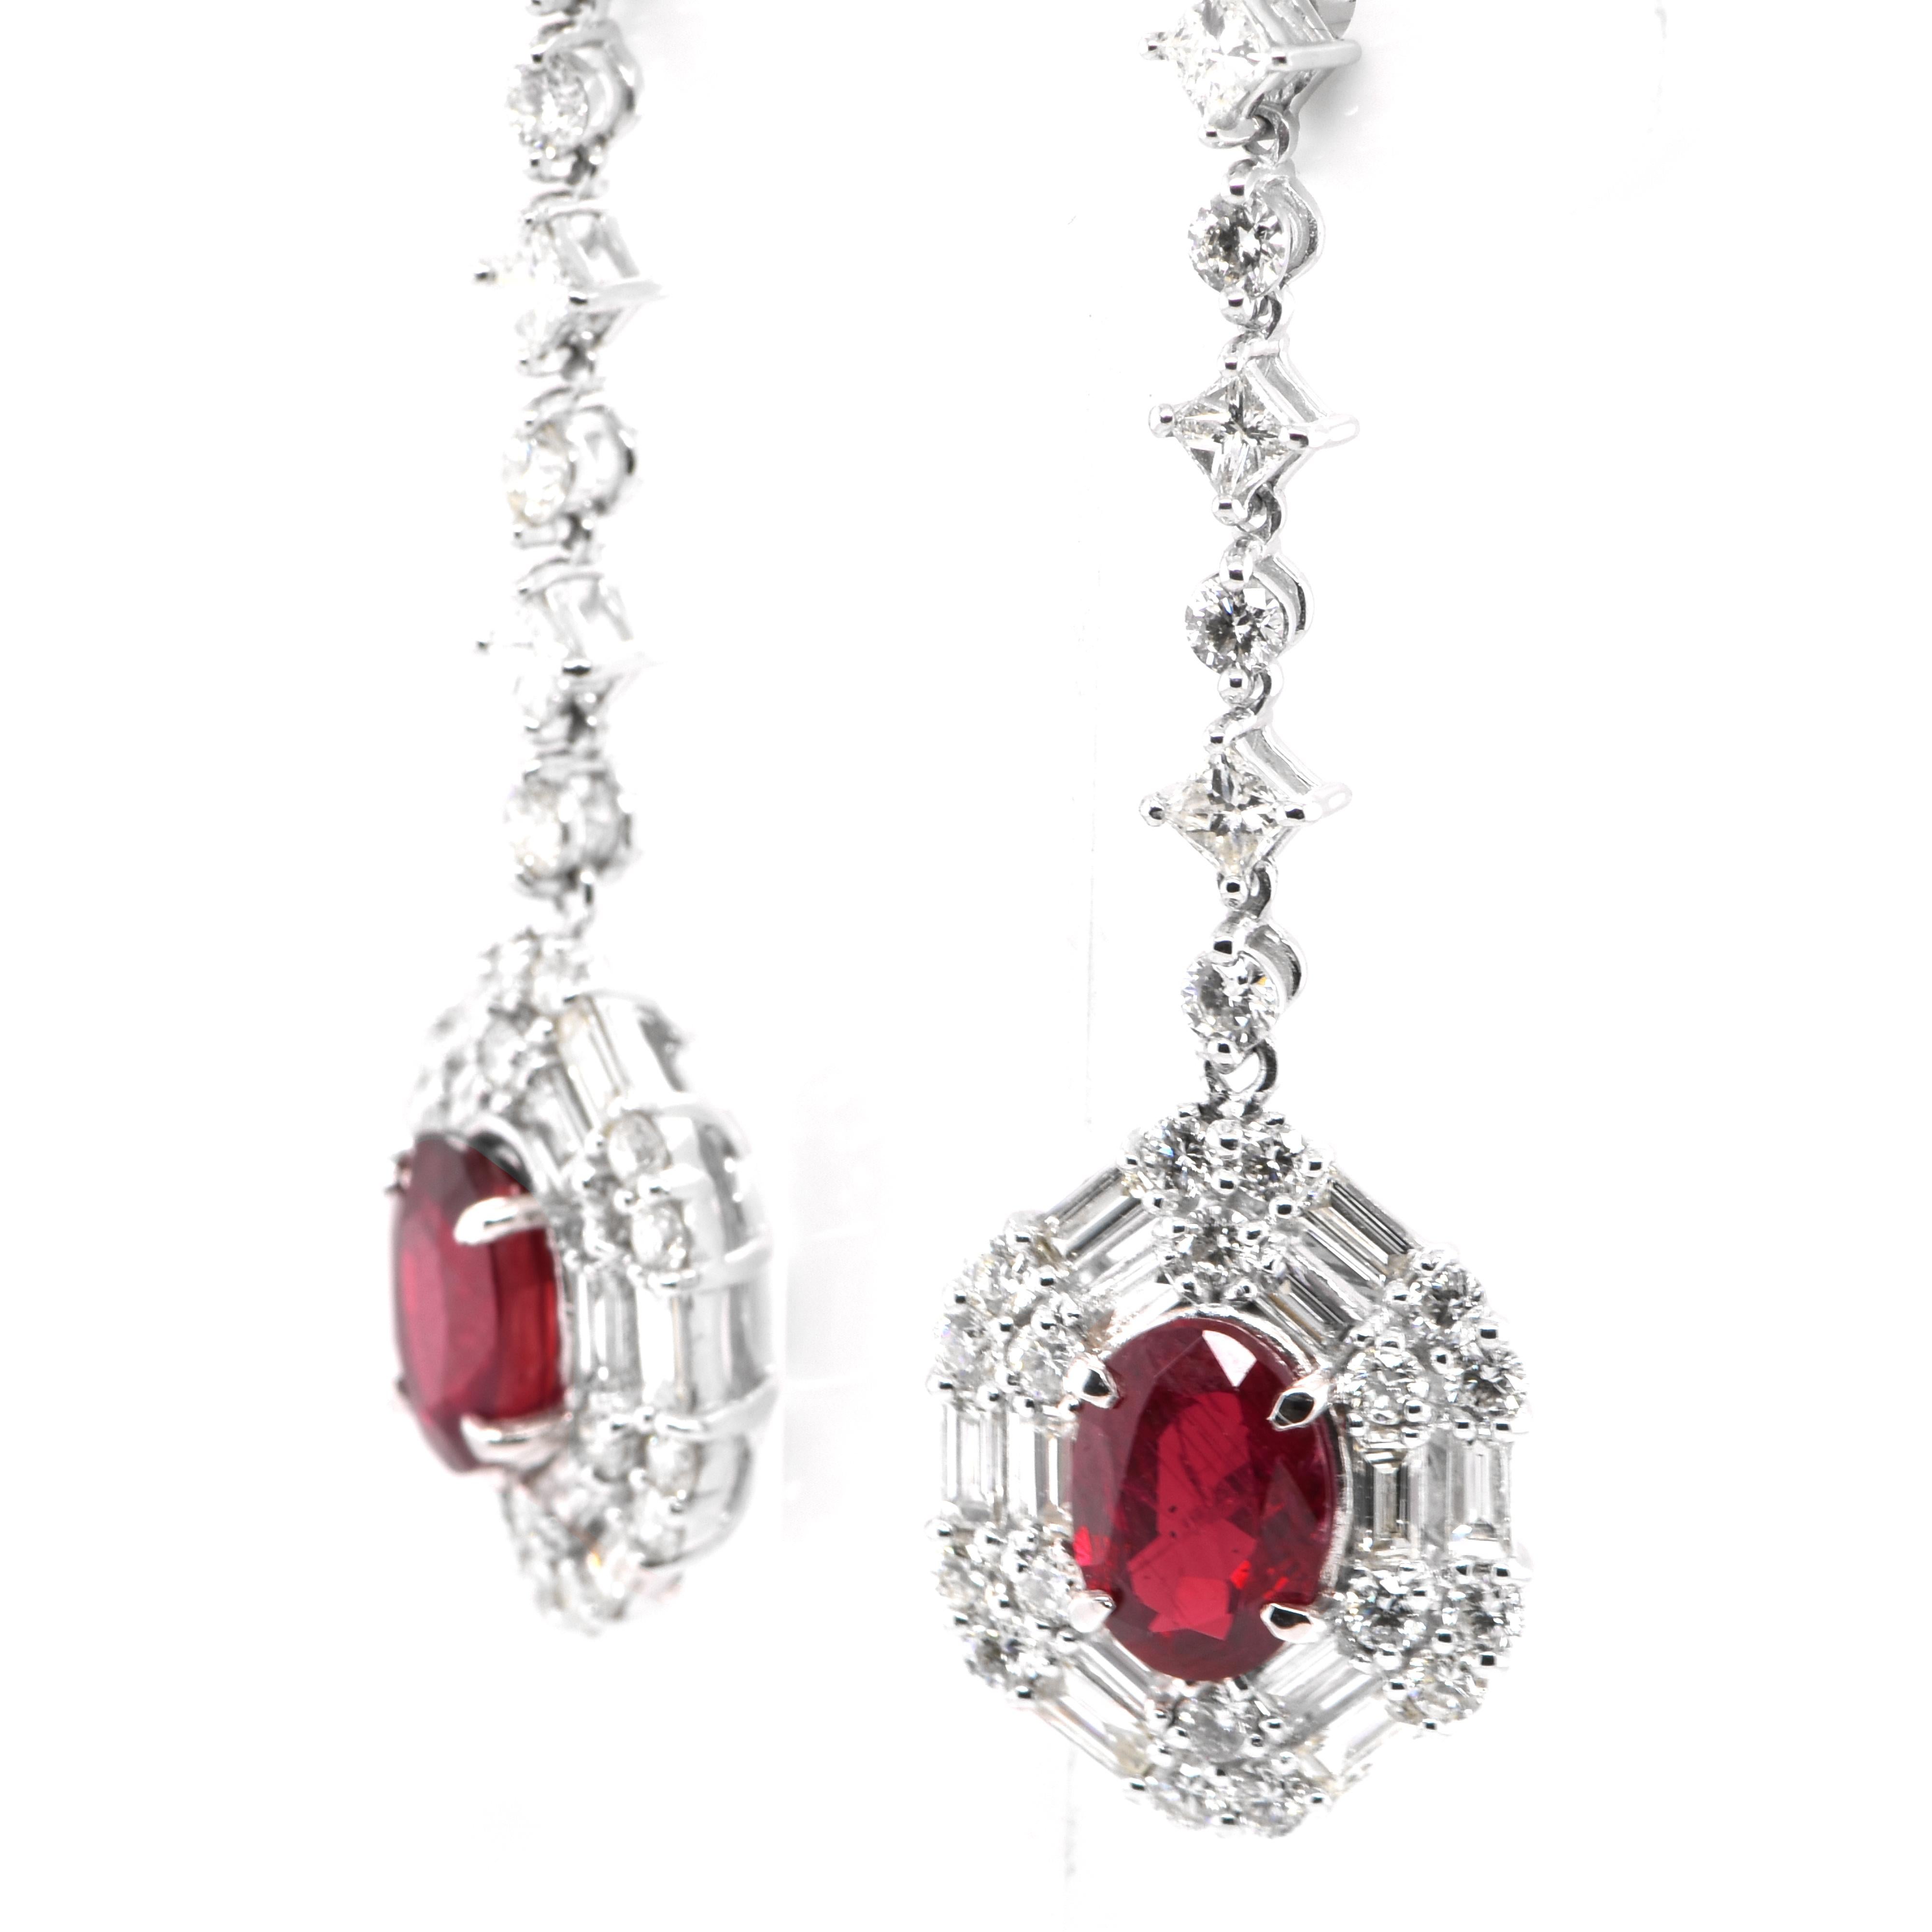 Modern GIA Certified 2.19 Carat Natural Untreated Ruby Drop Earrings Set in Platinum